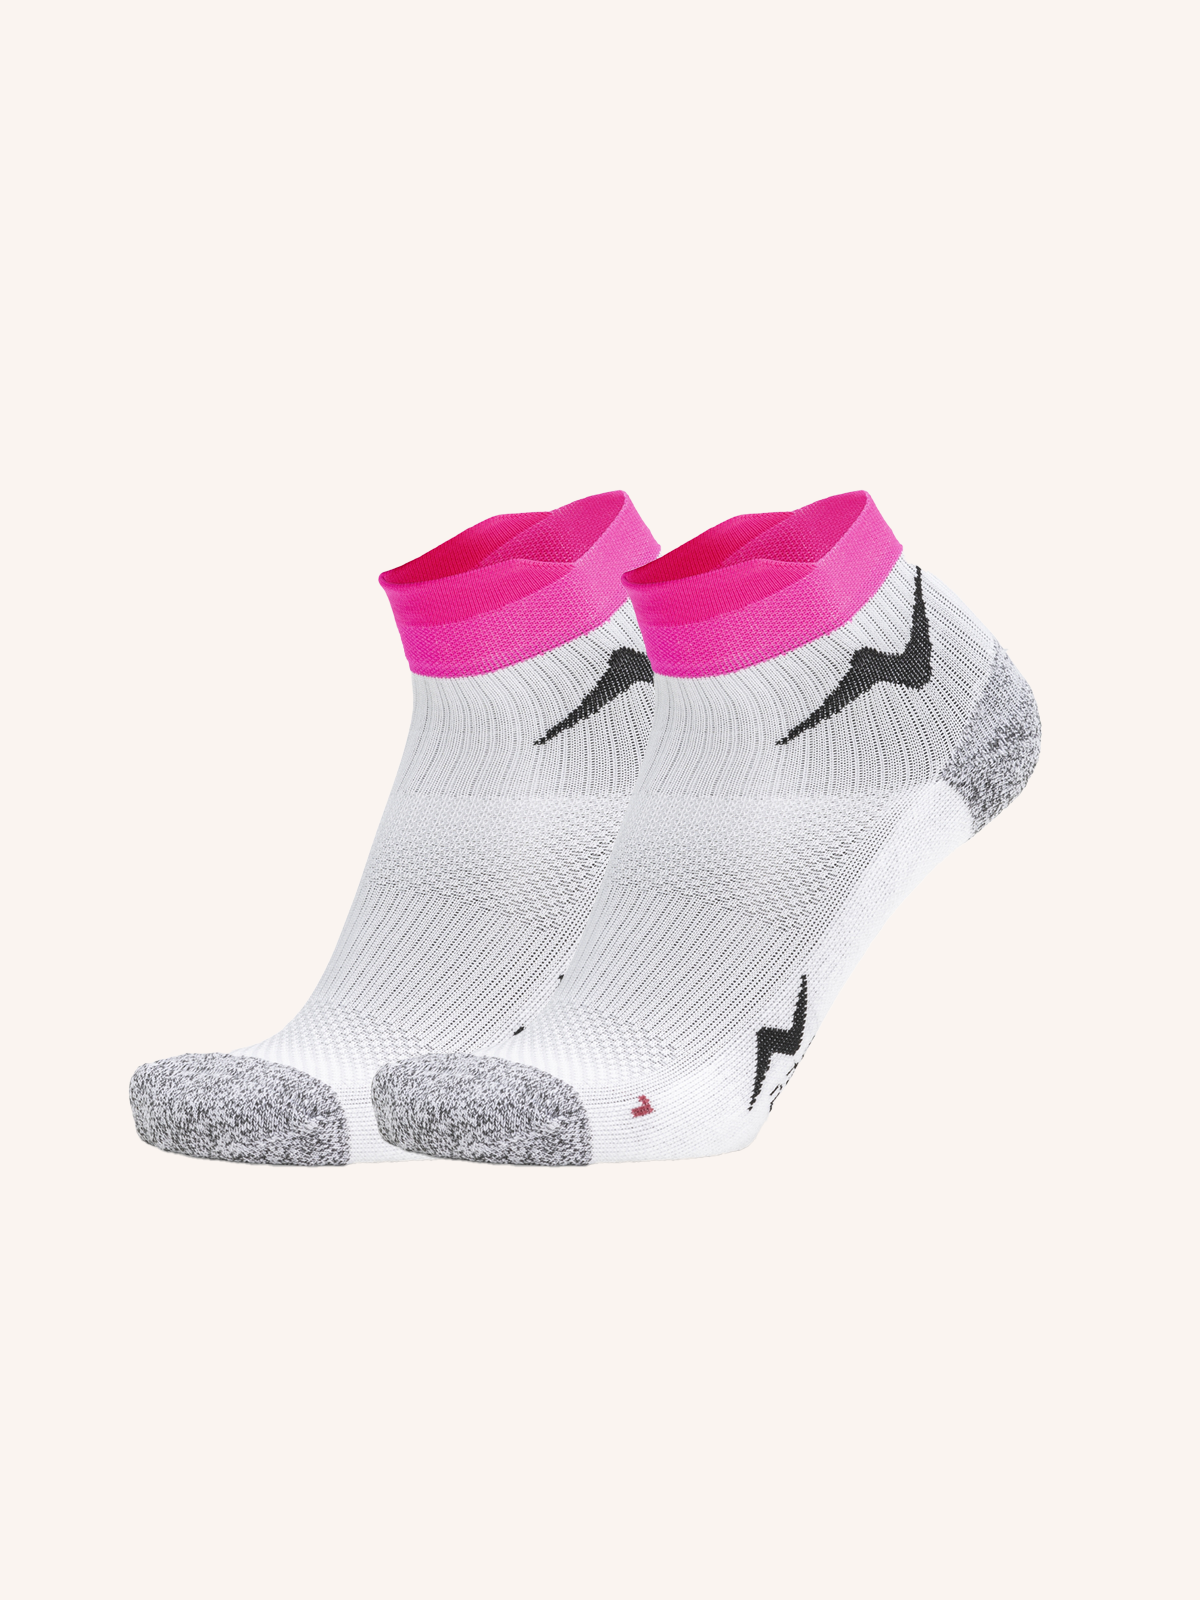 Short Dryarn Sock for Women's Running | Plain Color | Pack of 2 Pairs | PRS PRO 03D